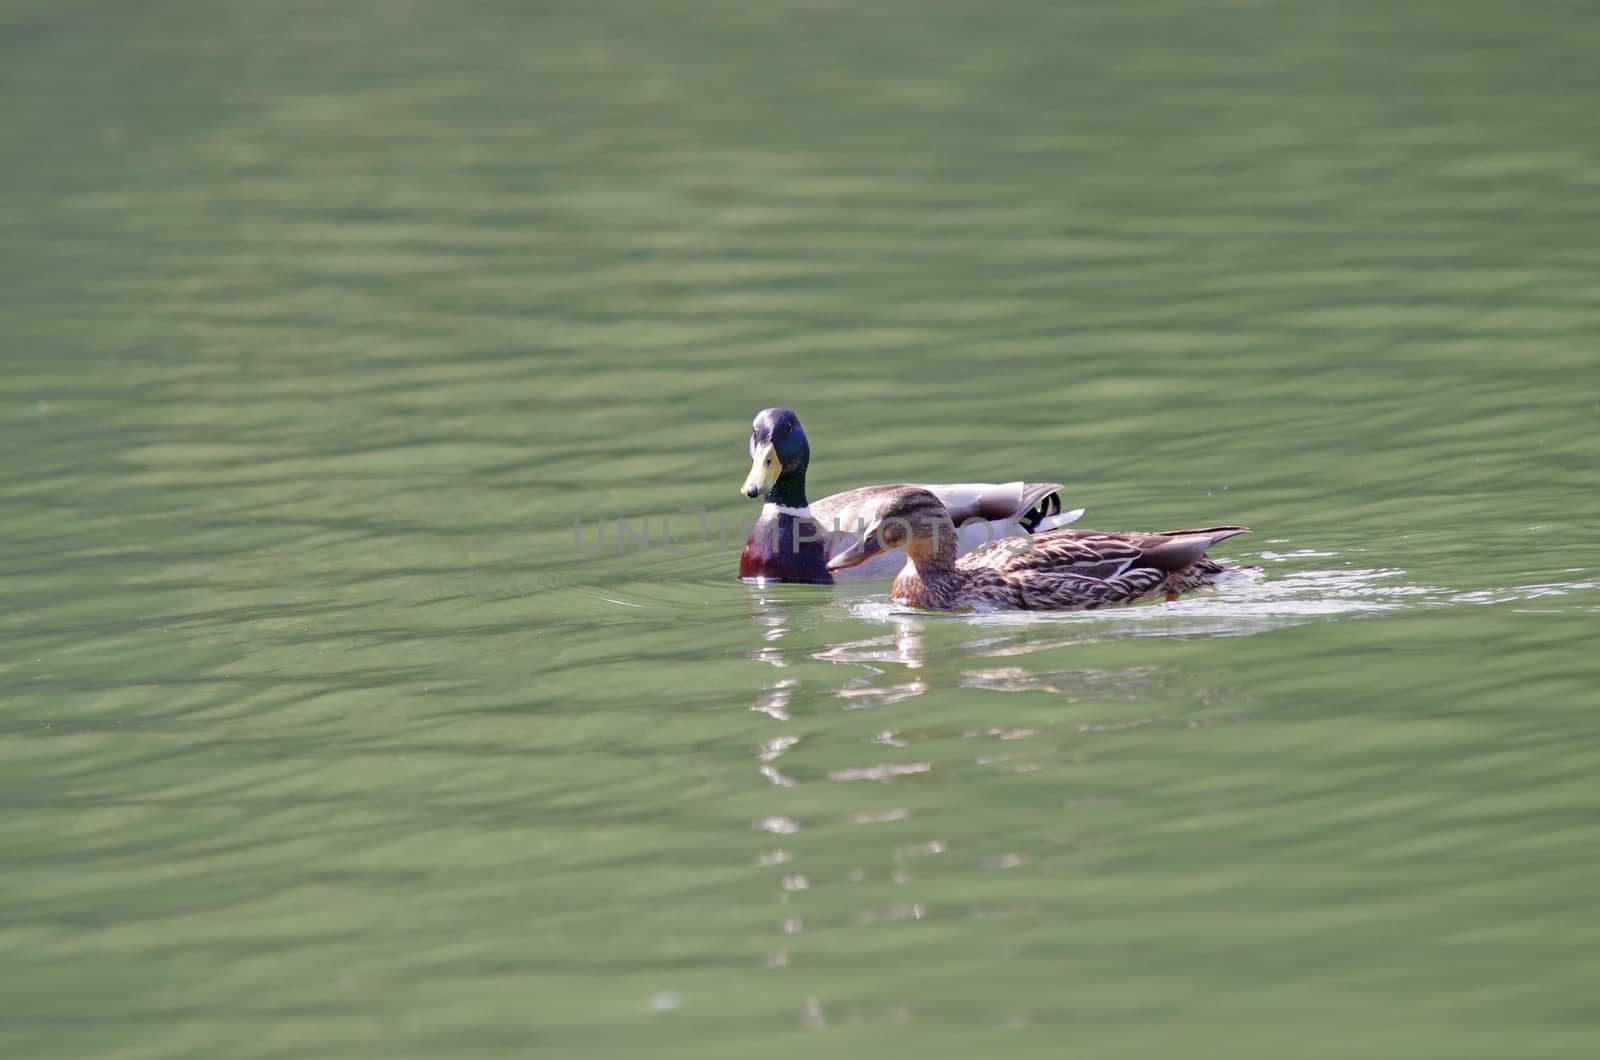 Two ducks on the lake in Romania